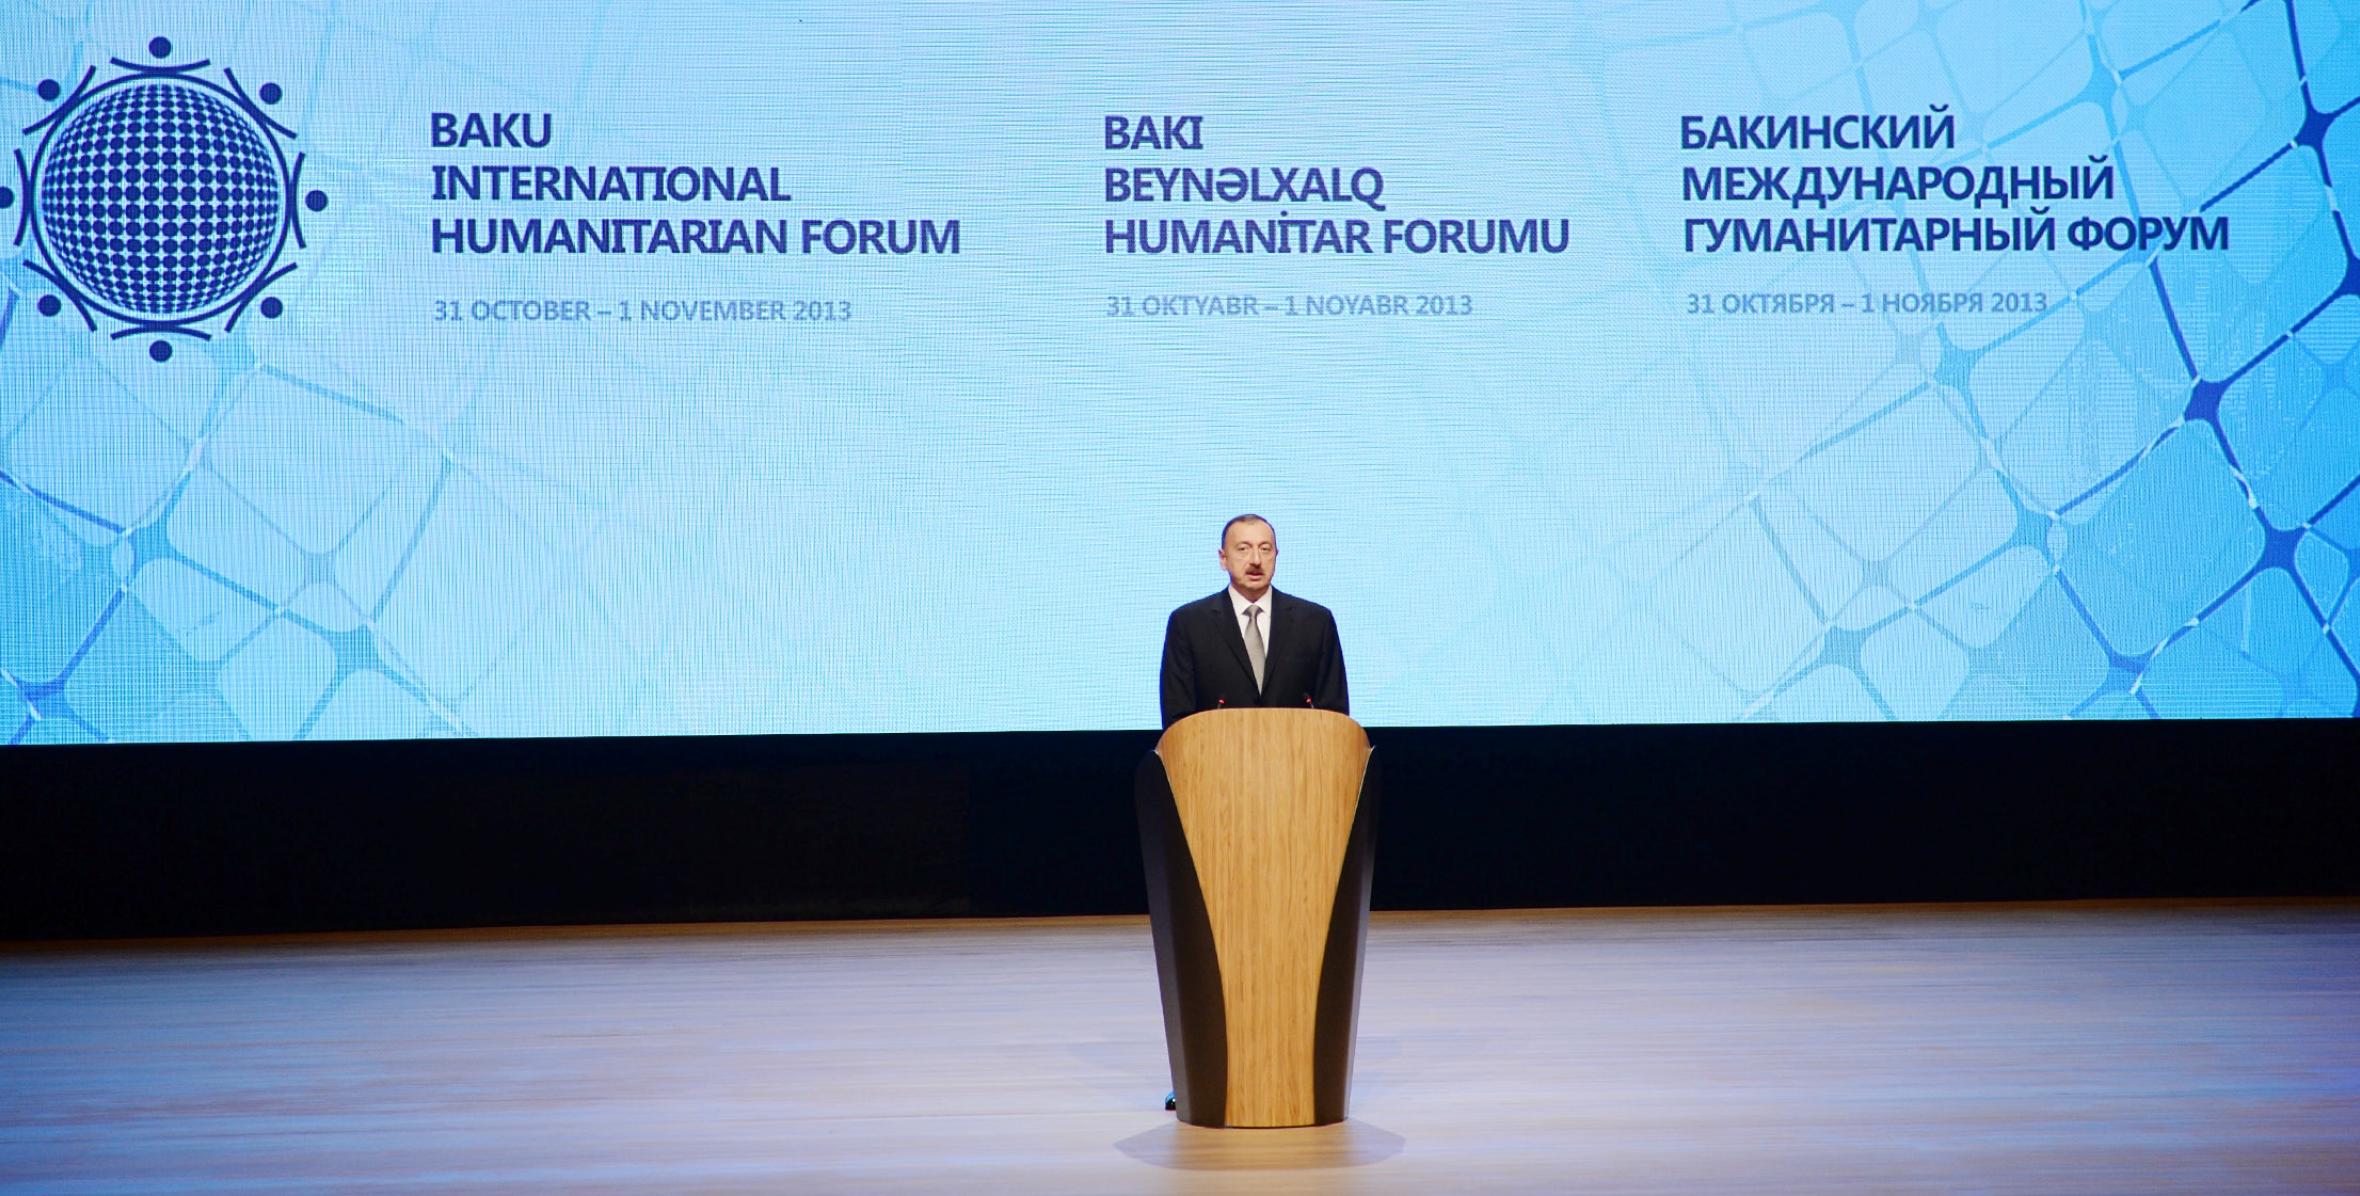 Ilham Aliyev attended the opening of the Third Baku International Humanitarian Forum